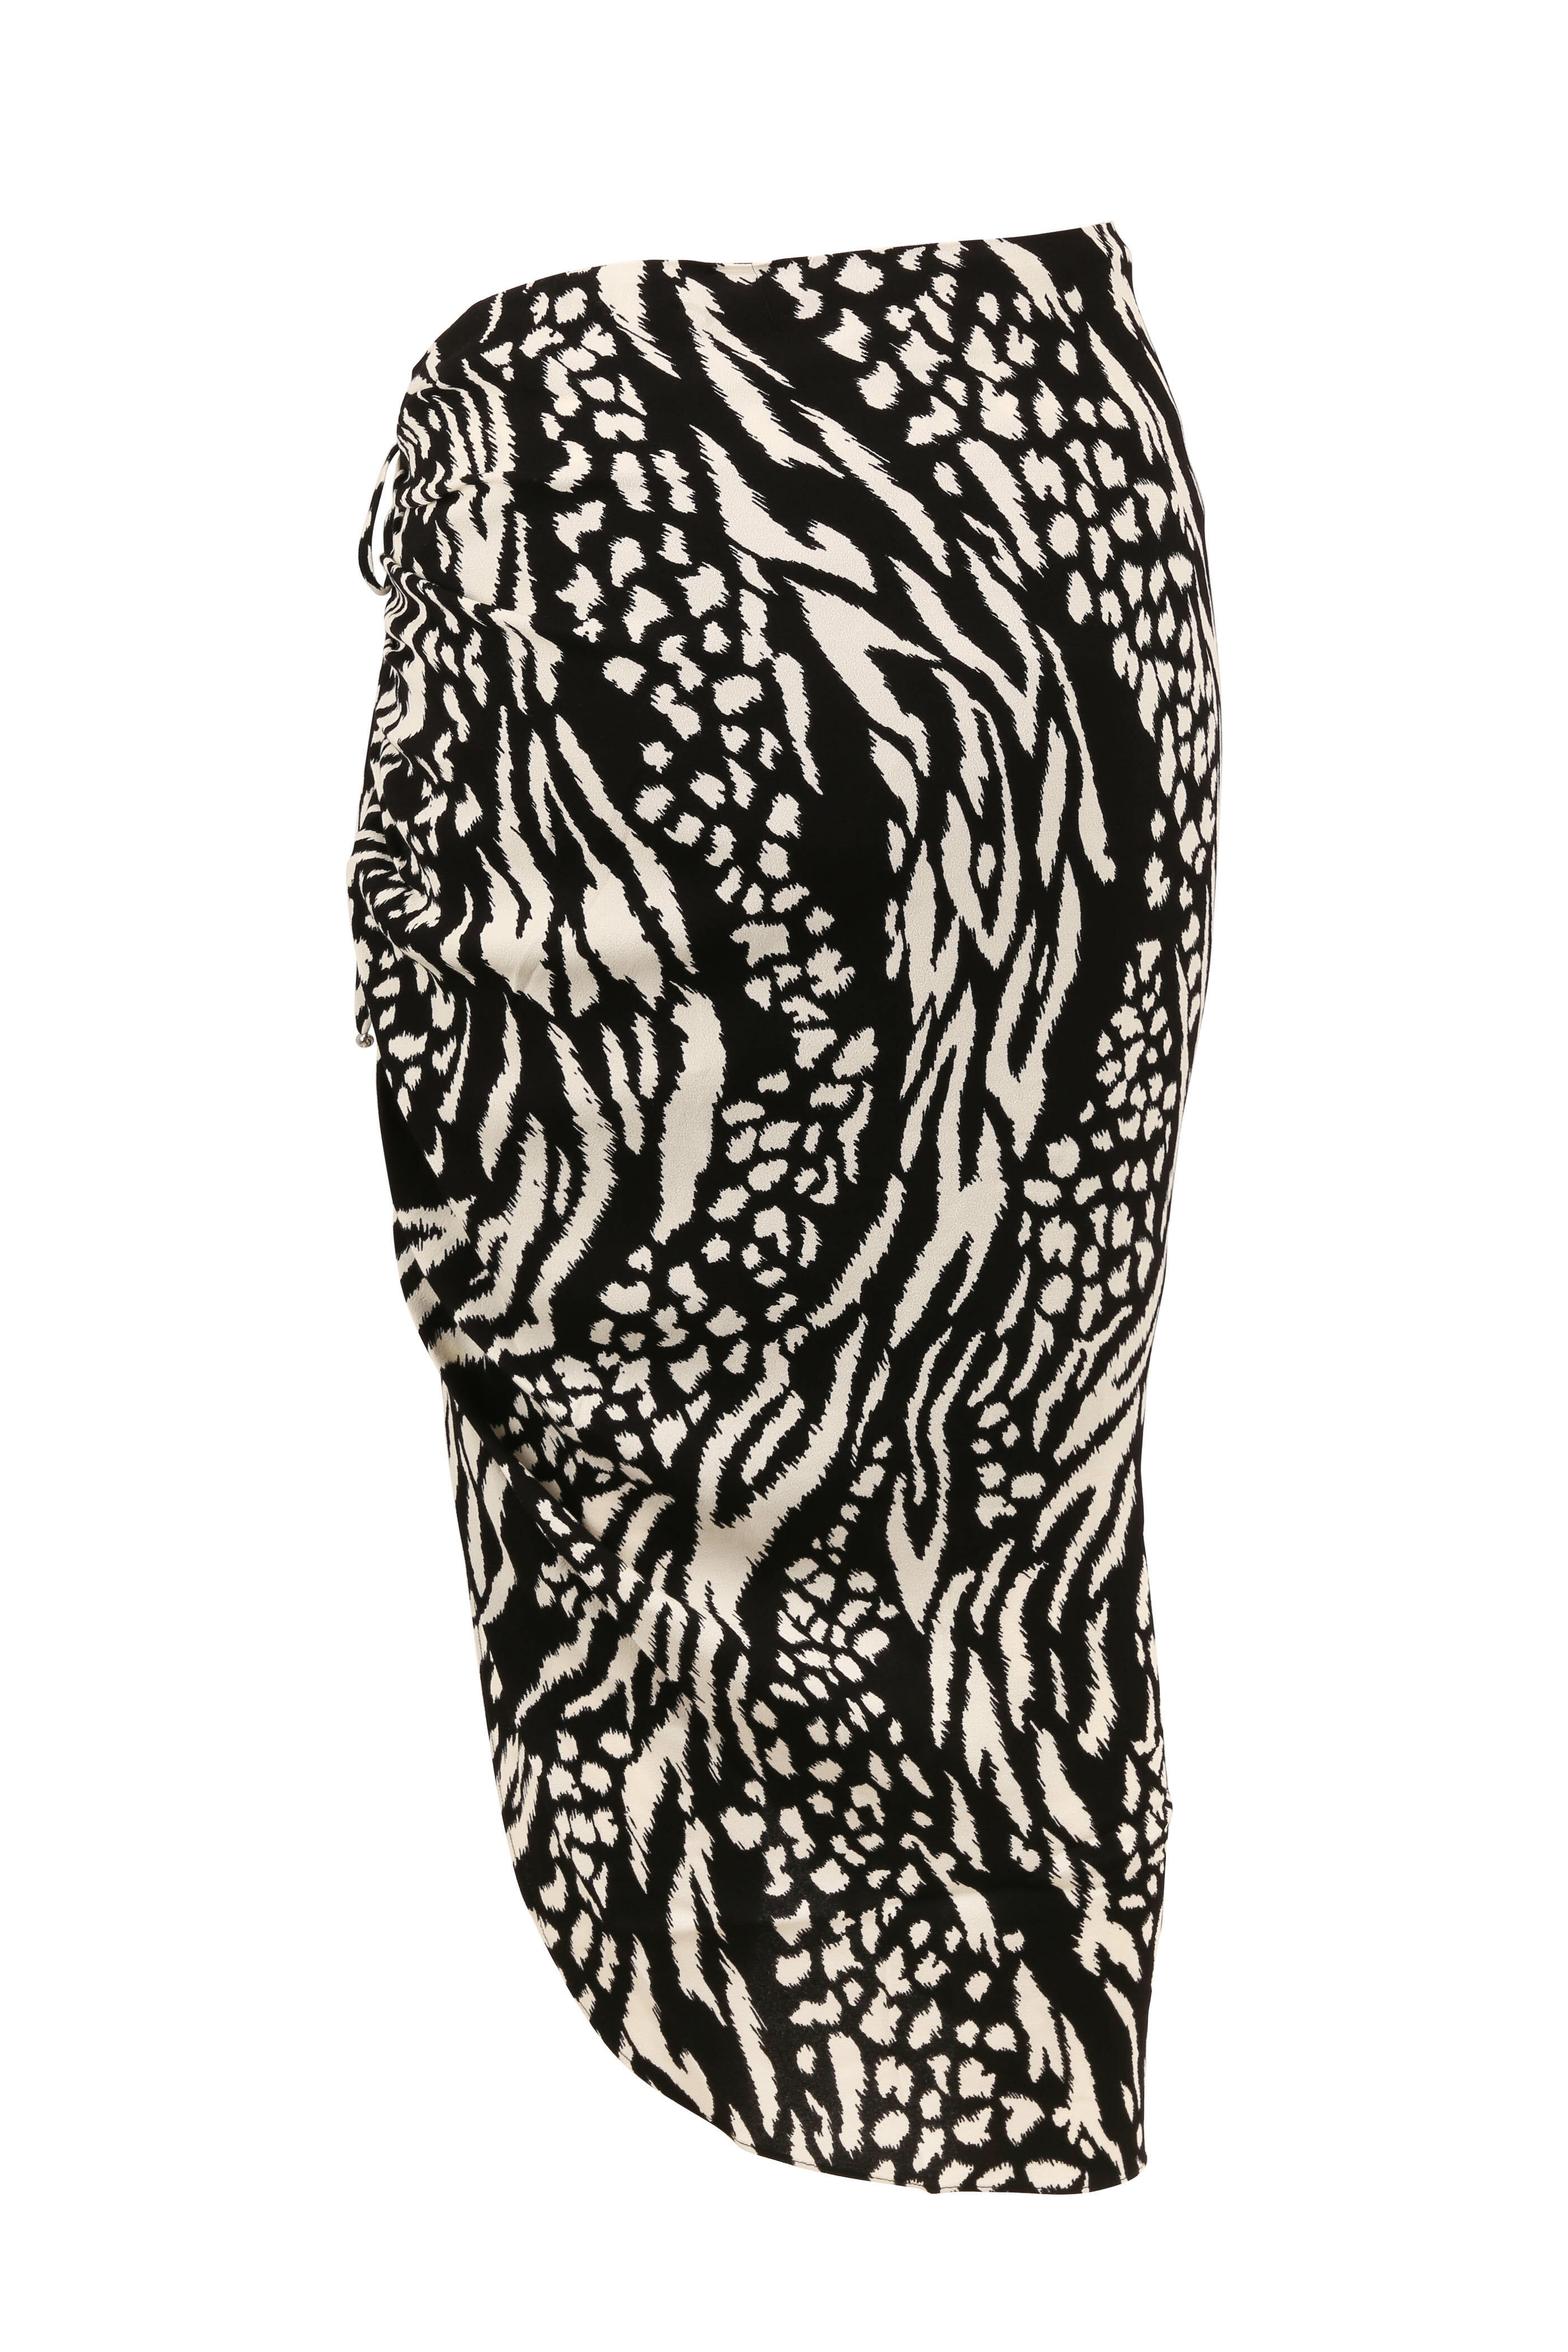 Veronica Beard - Ari Black & Bone Animal Print Ruched Skirt